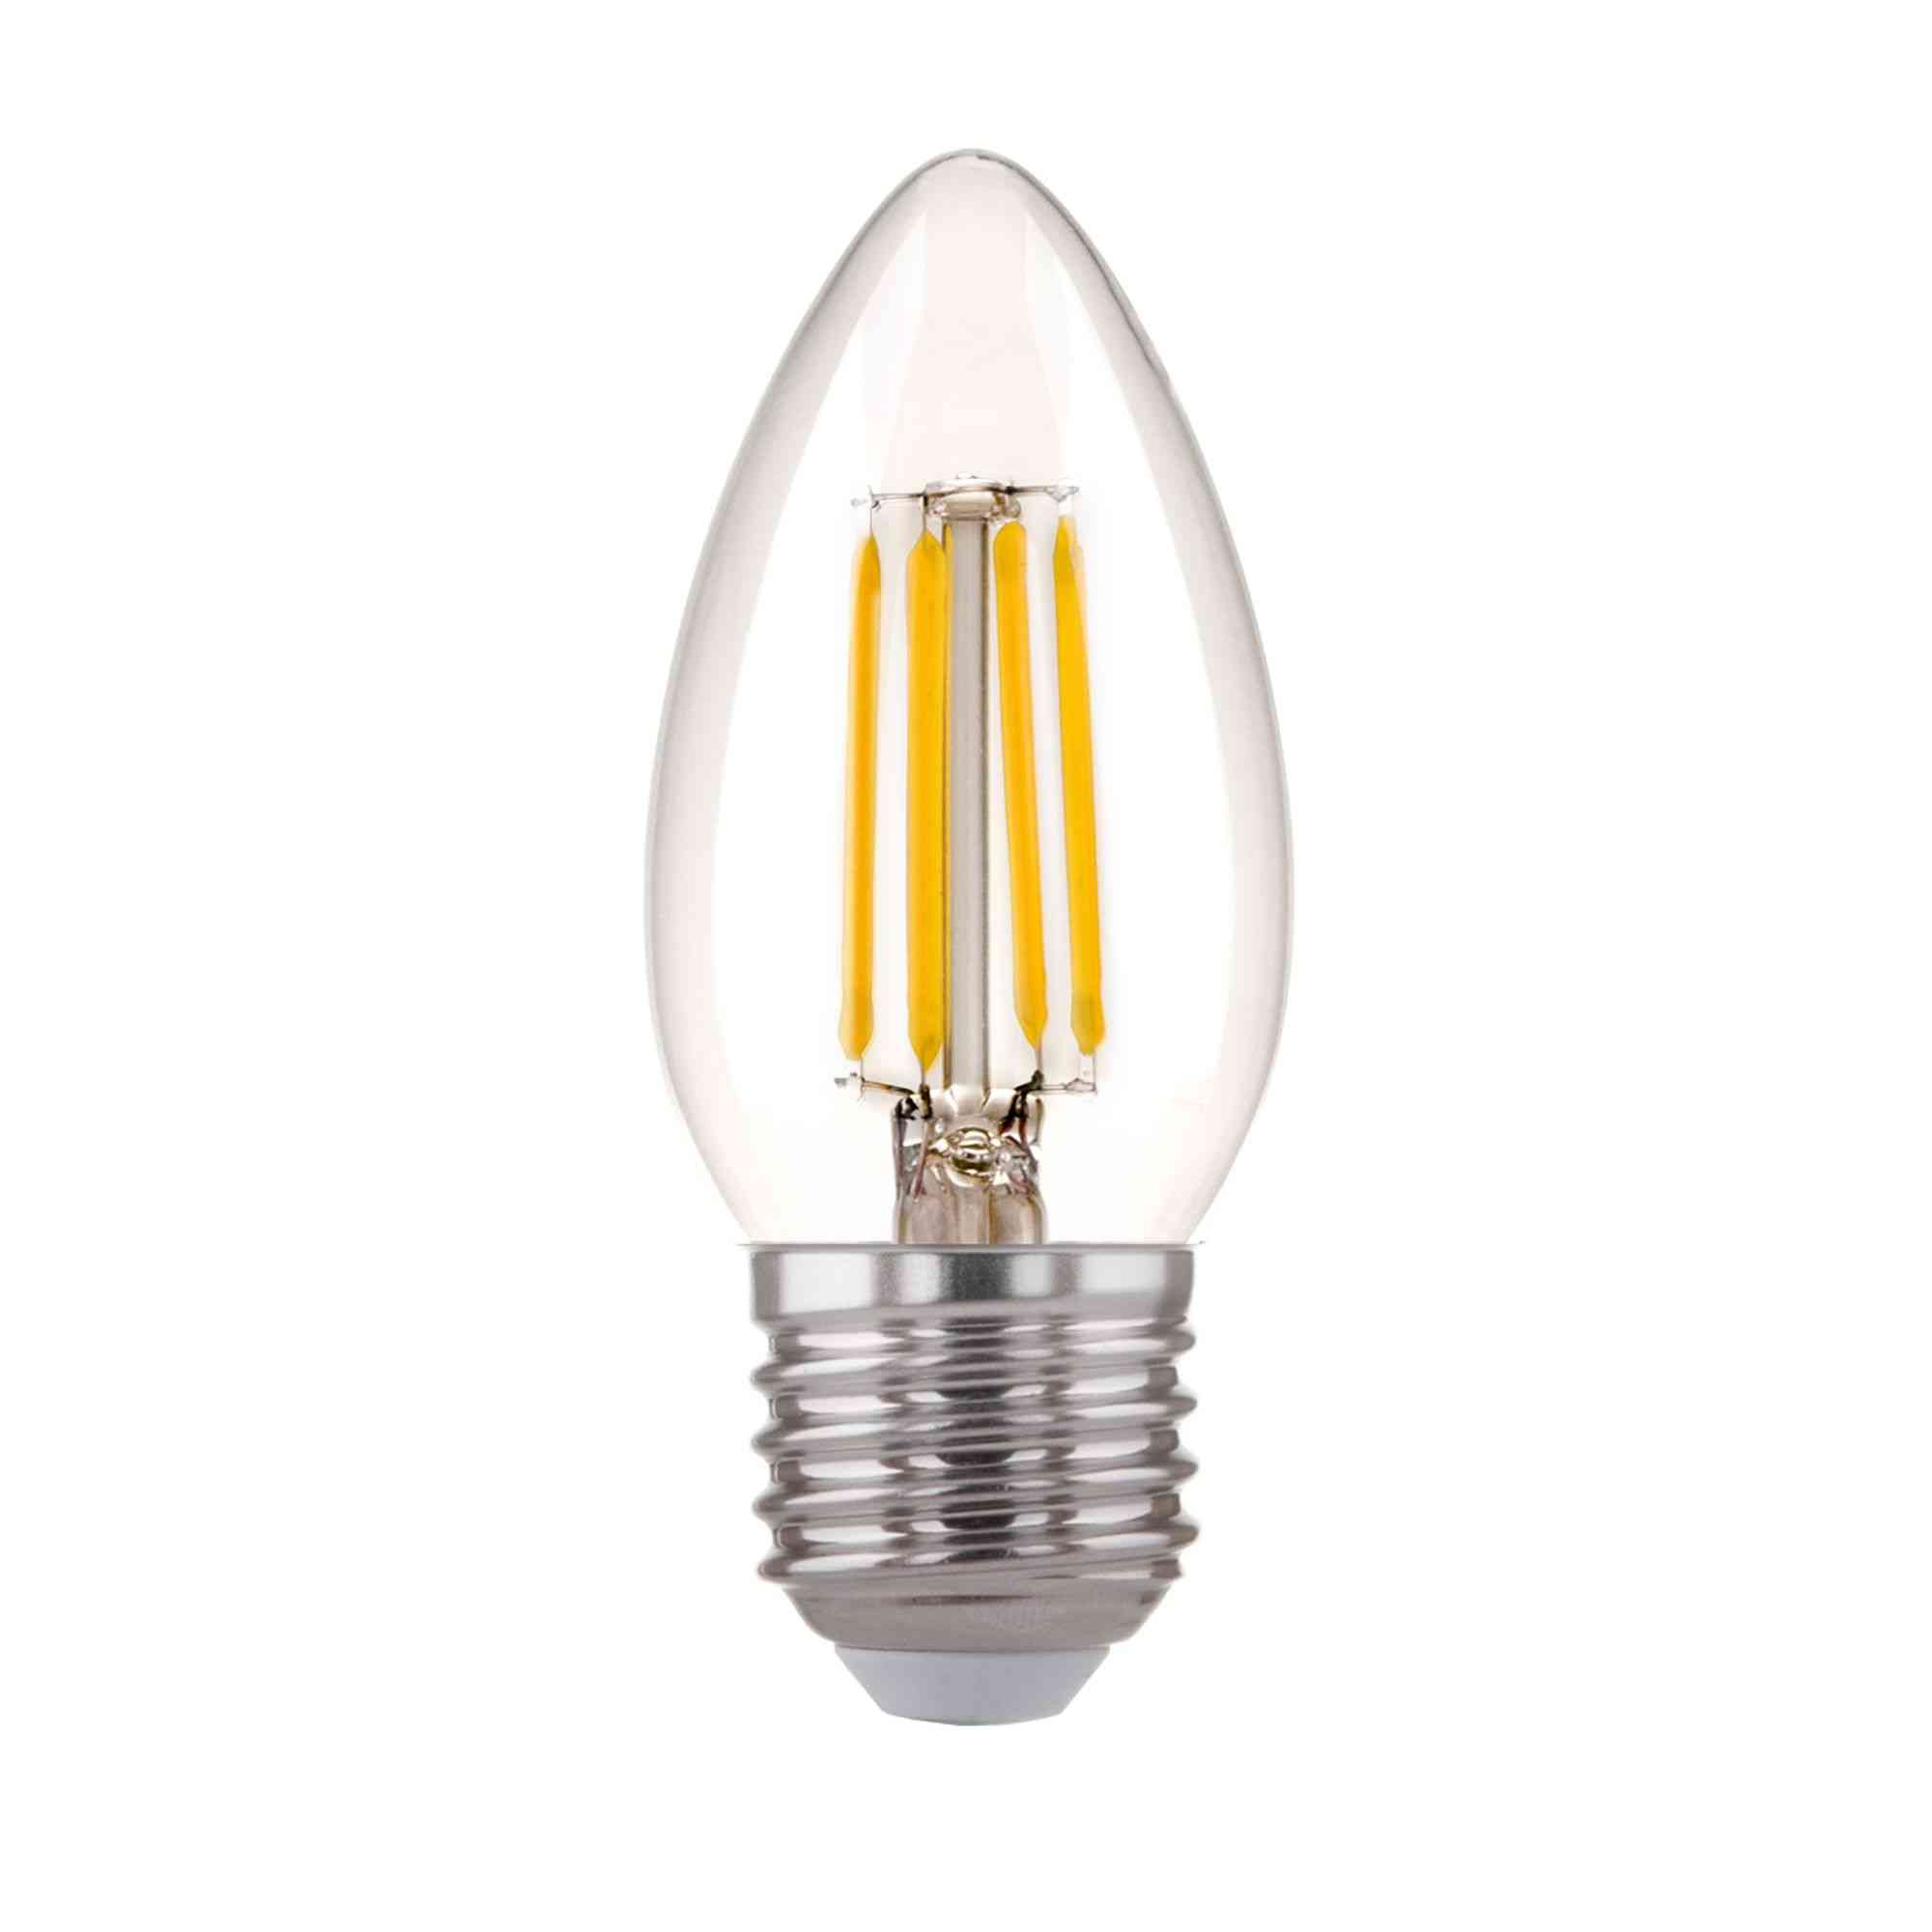 Филаментная светодиодная лампа Свеча VAMVIDNEE VV416180 2